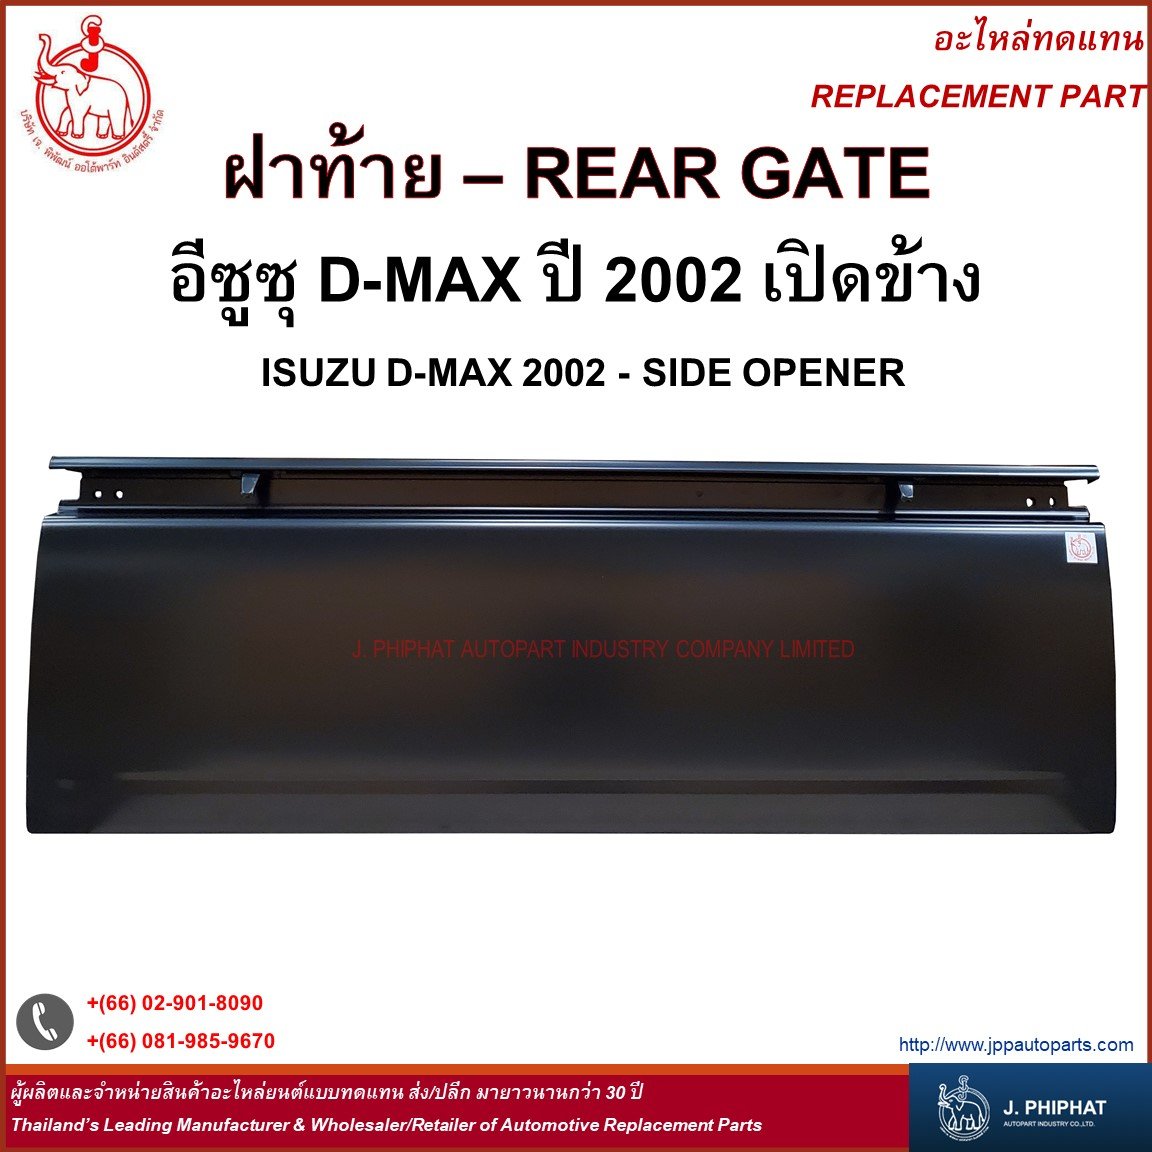 REAR GATE - ISUZU D-MAX 2002 SIDE OPENER